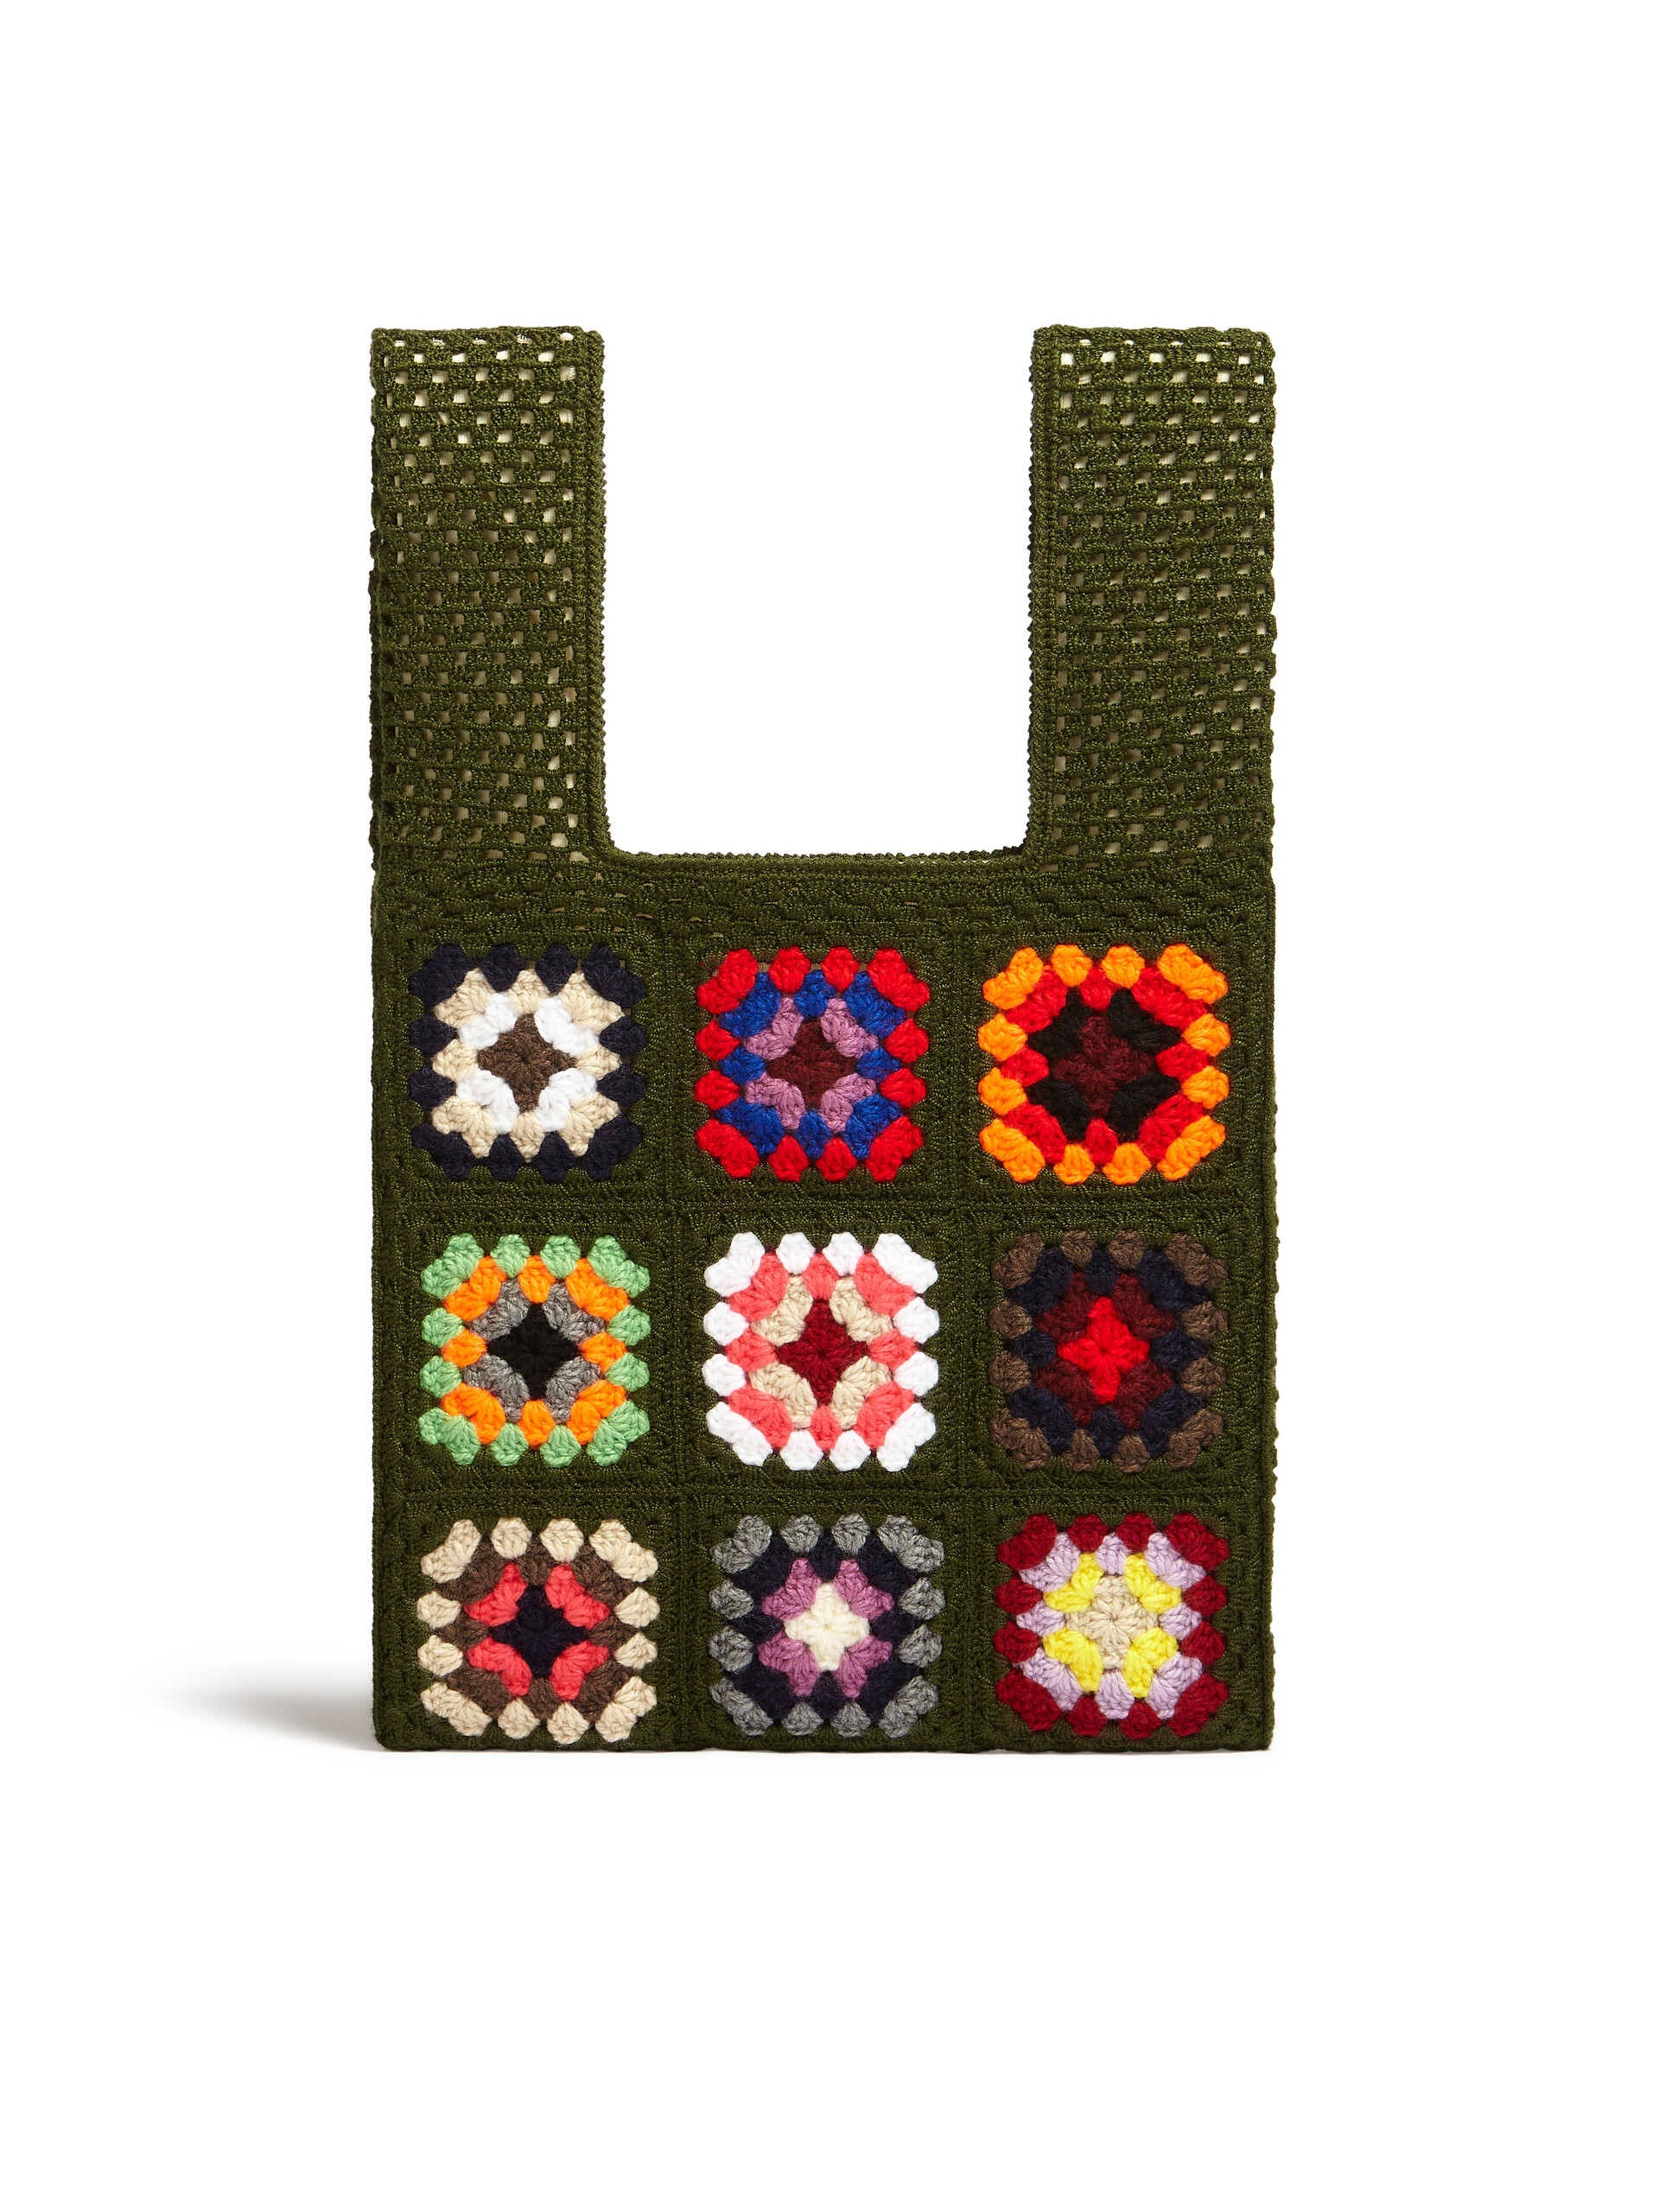 MARNI MARKET FISH bag in green crochet - Bags - Image 3